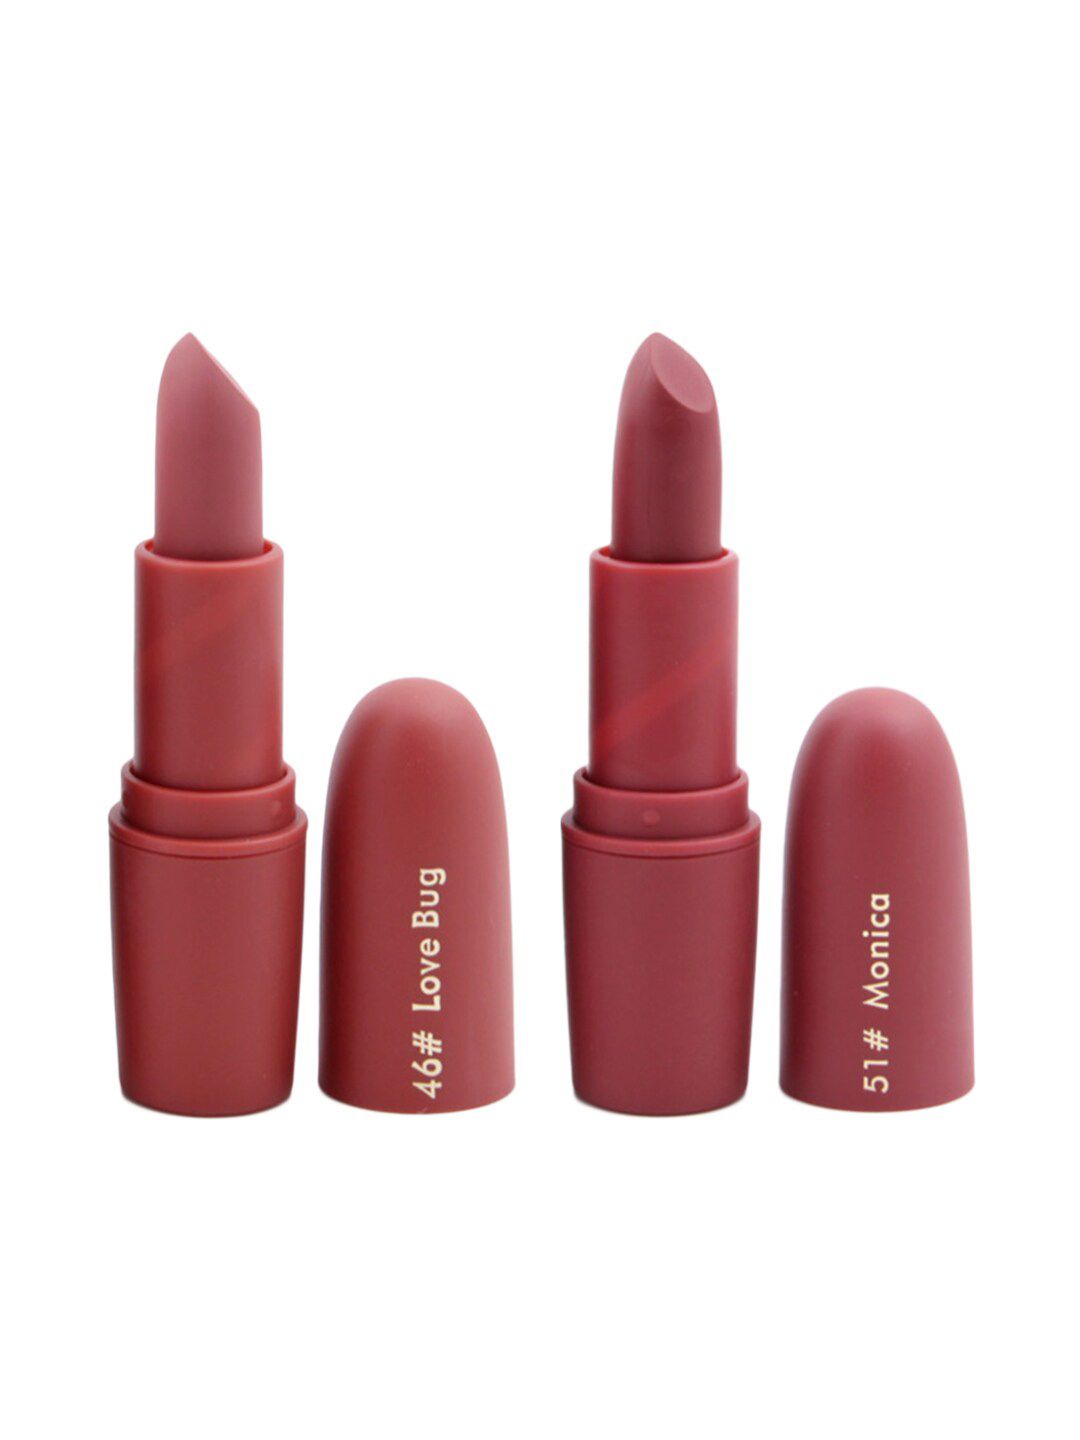 MISS ROSE Set of 2 Matte Creamy Lipsticks - Love Bug 46 & Monica 51 Price in India